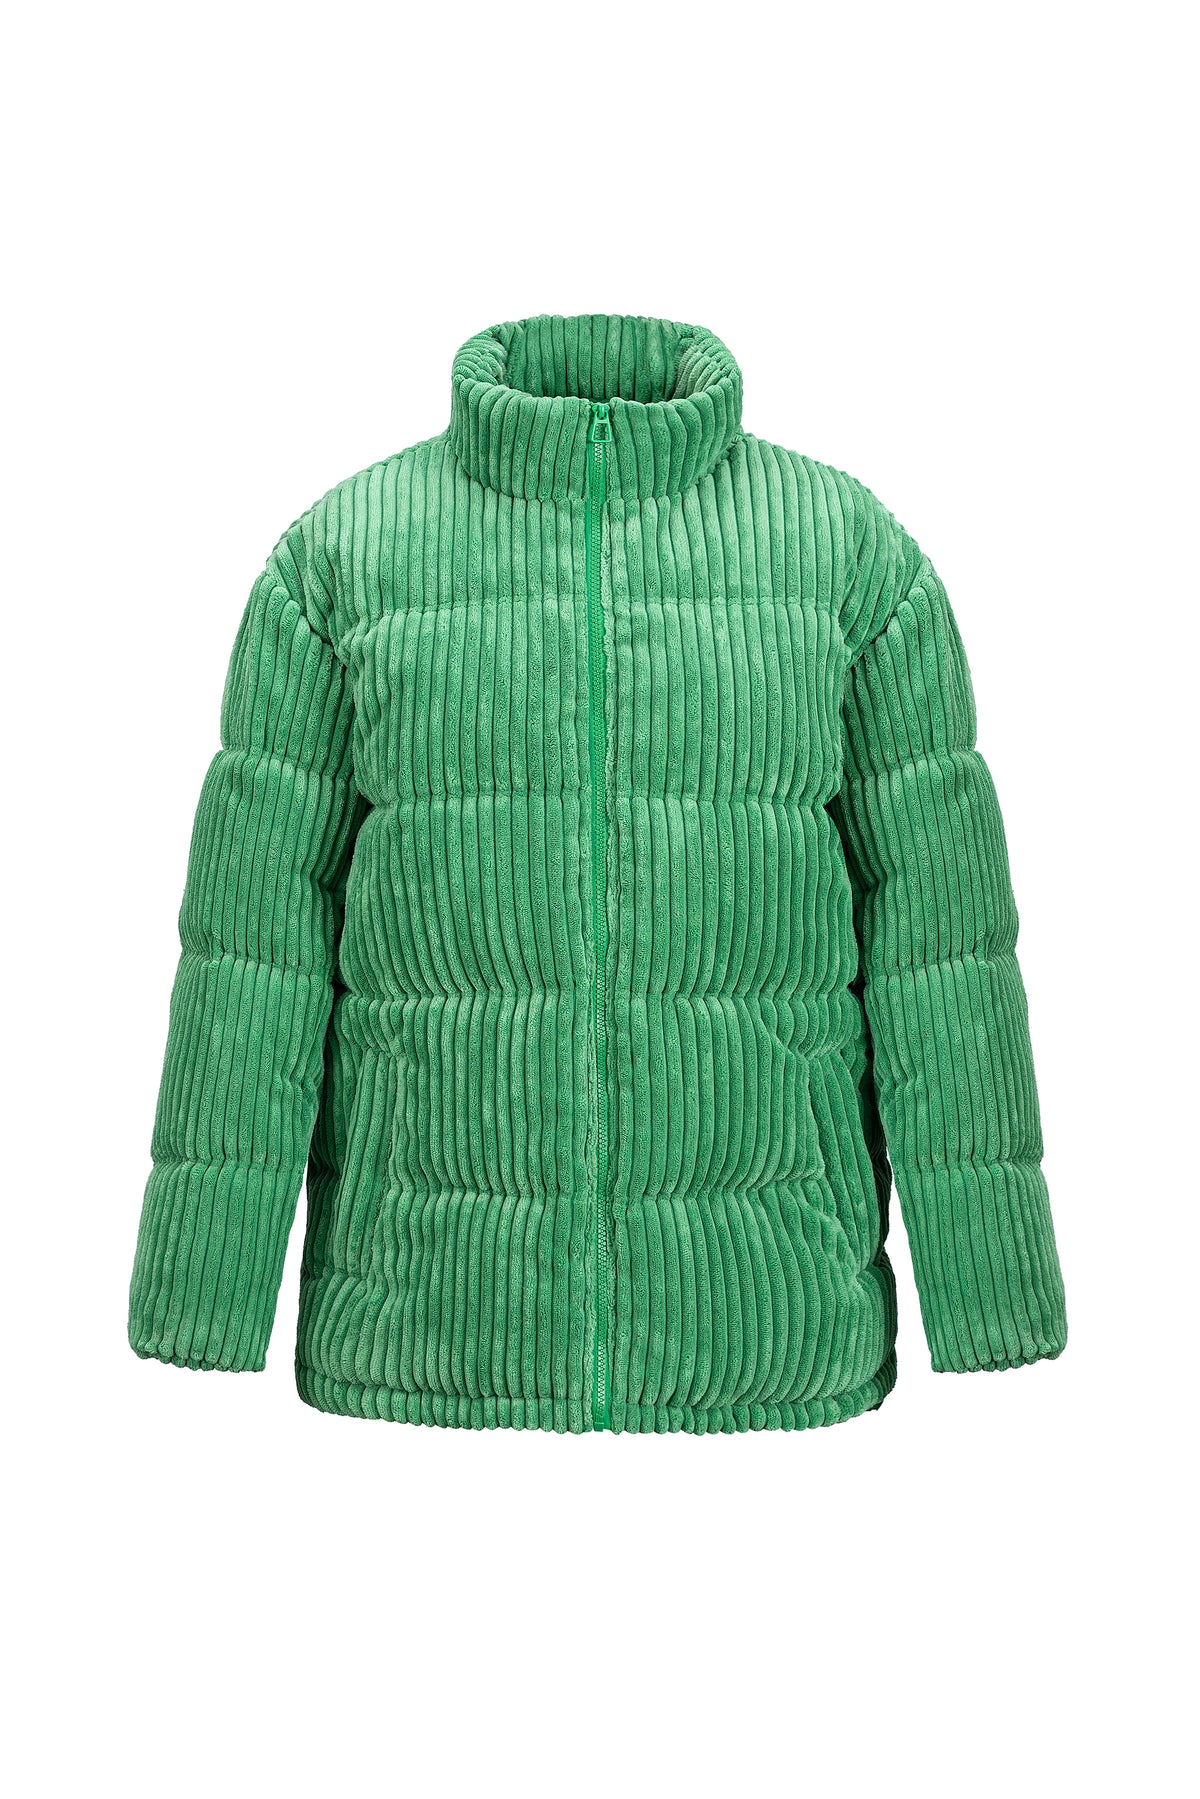 Vegancode - Corduroy jacket in Green